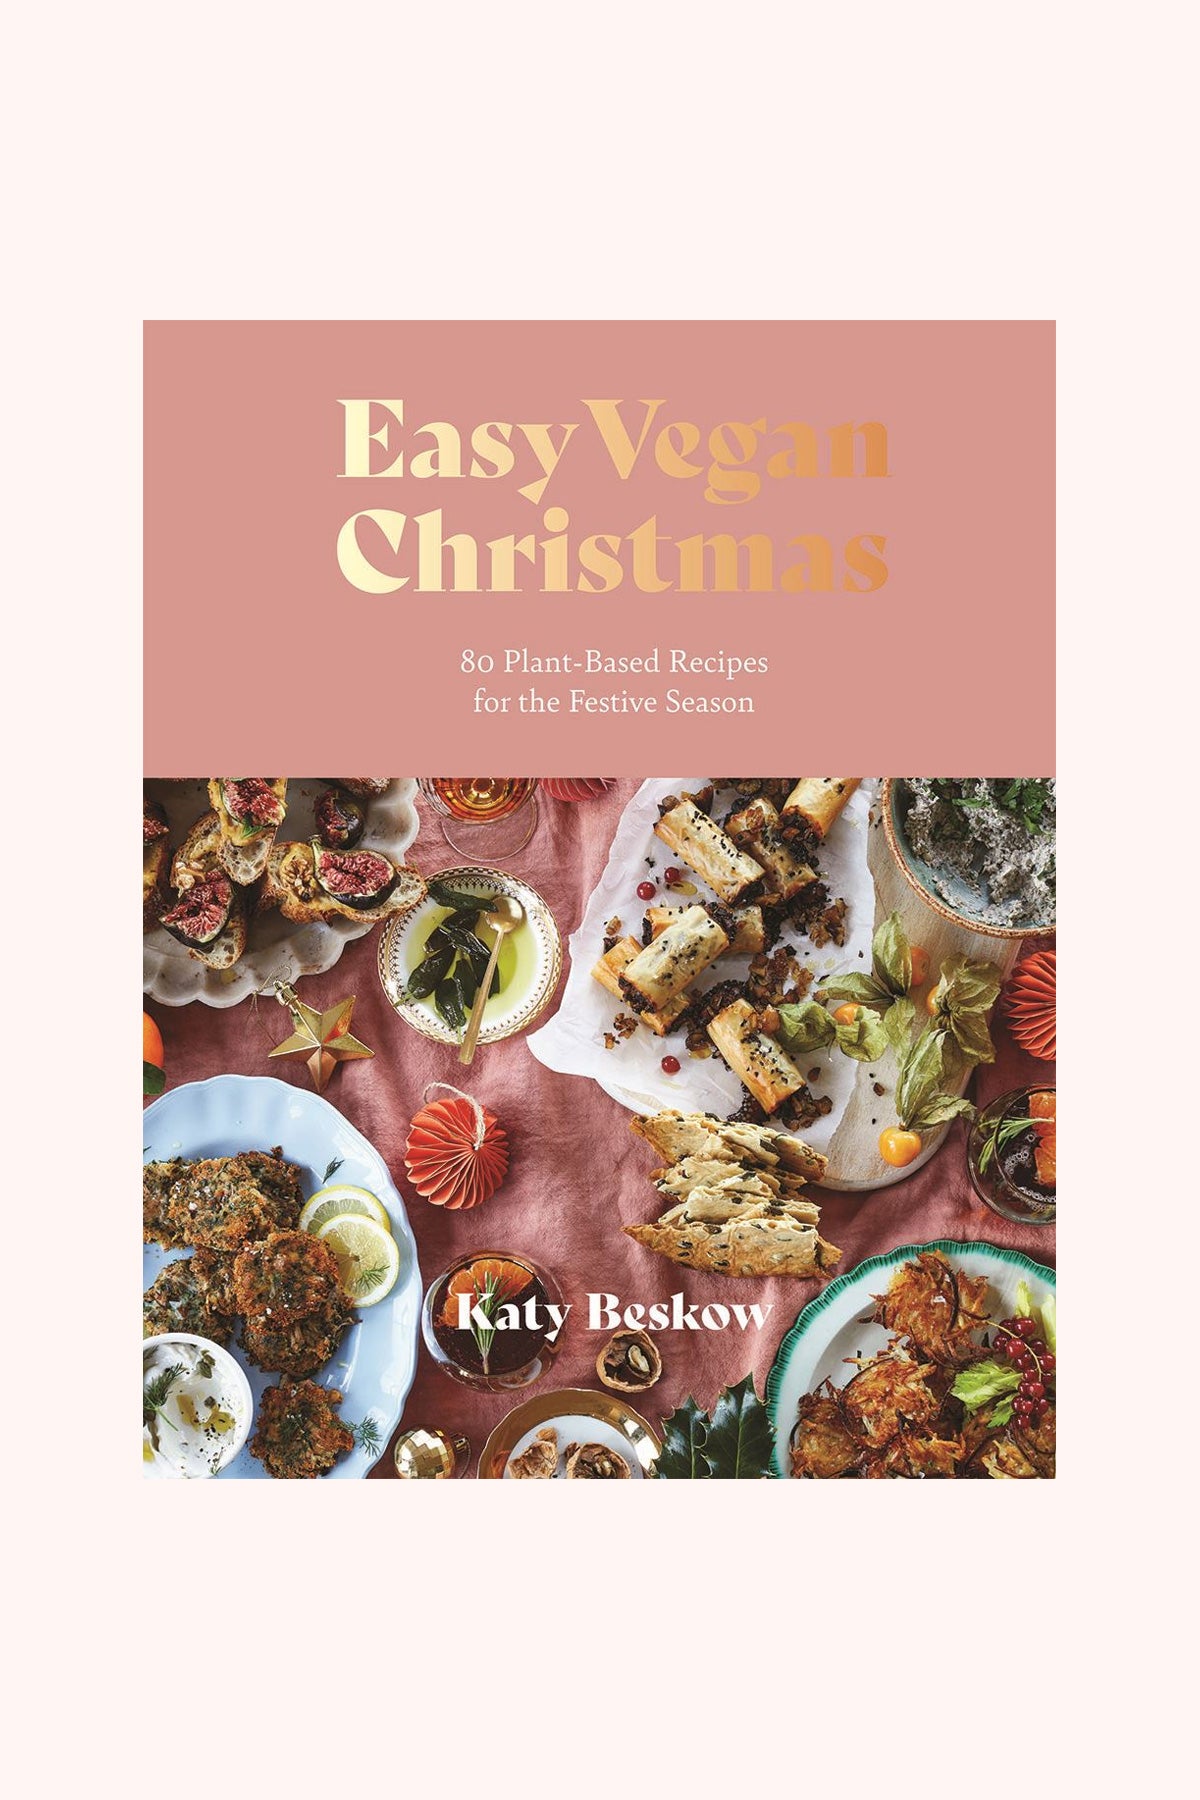 Easy Vegan Christmas: 80 Plant-Based Recipes